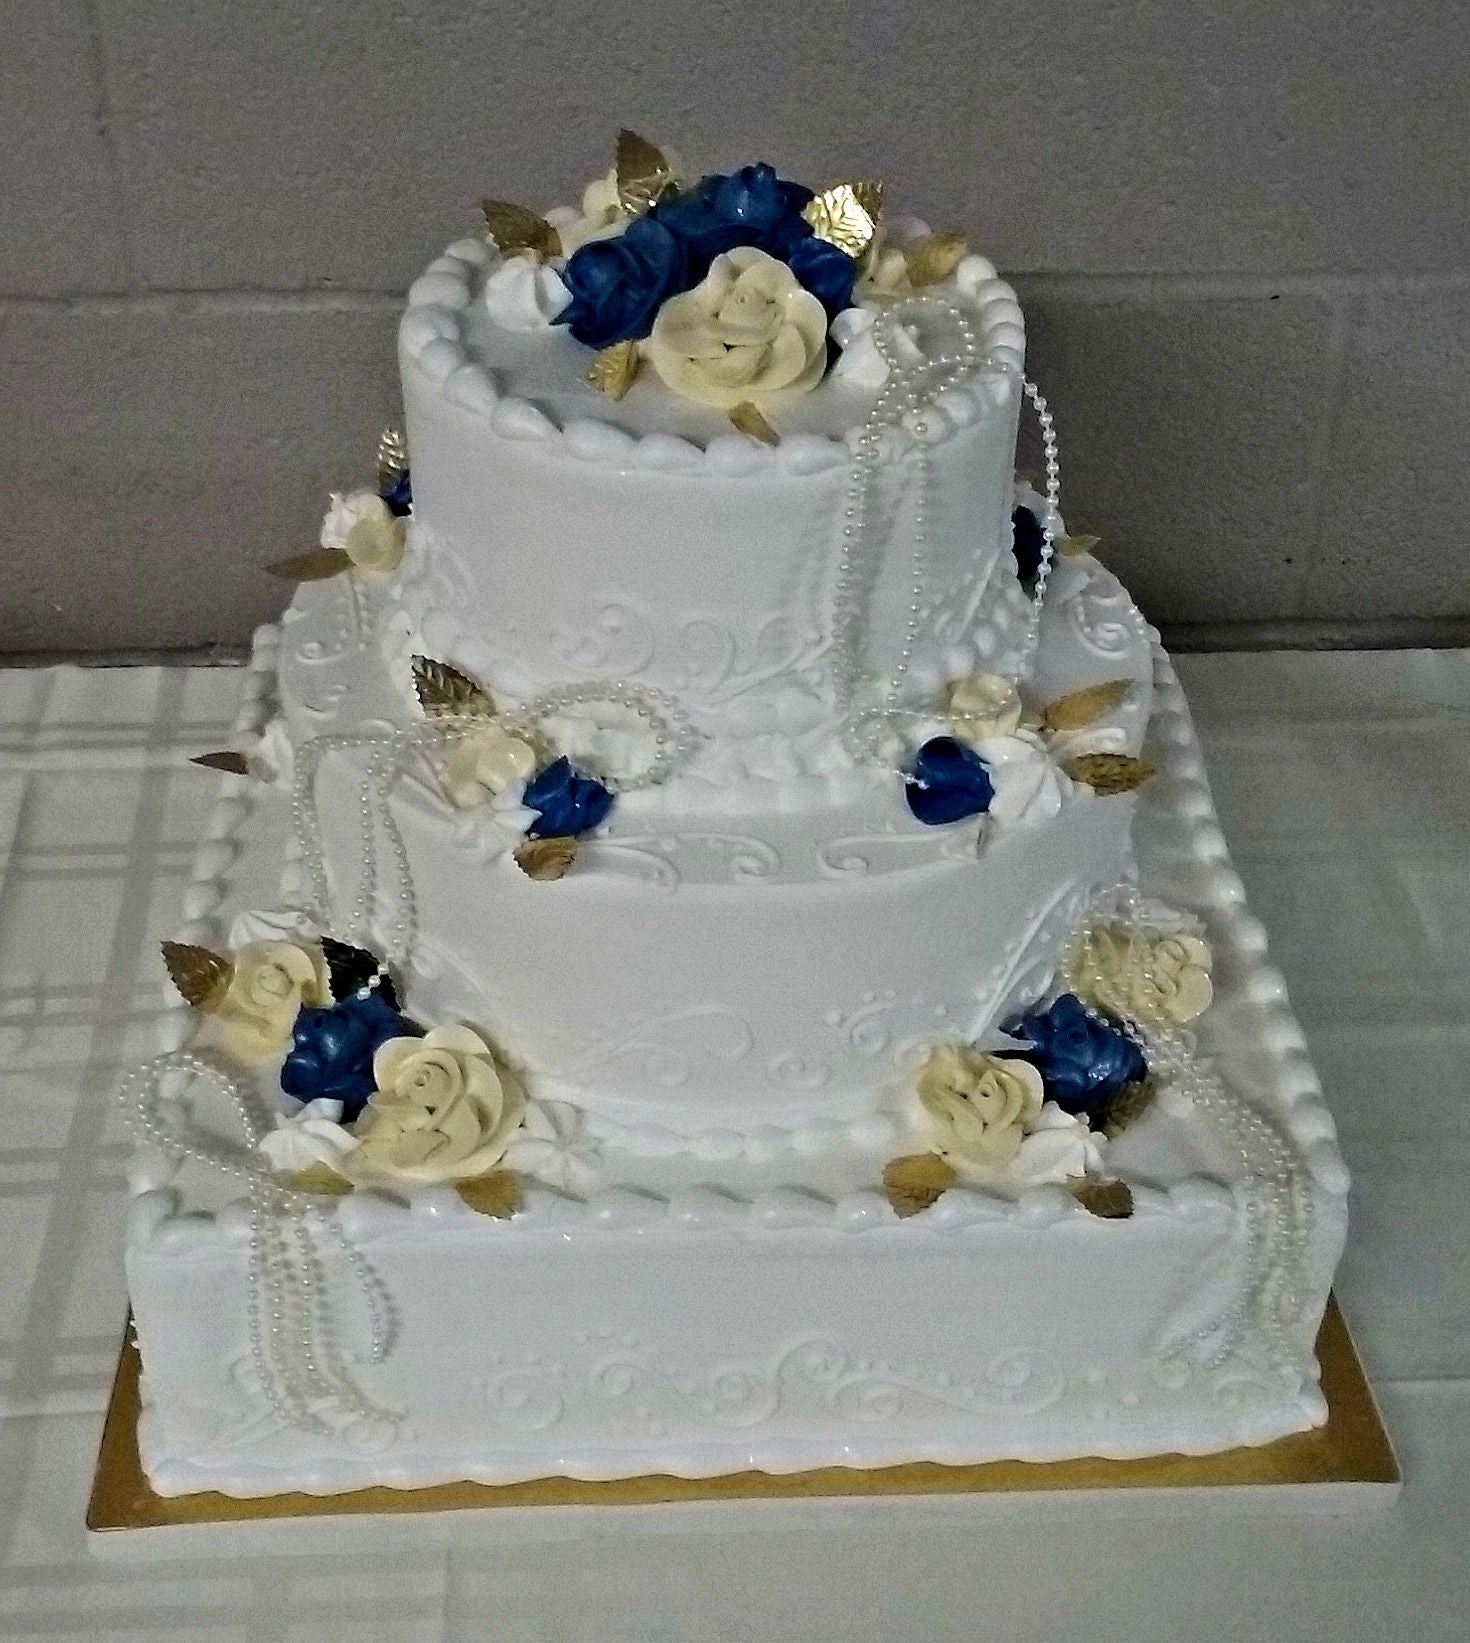 Bride's $21 Wedding Cake From Grocery Store Cracks Up TikTok